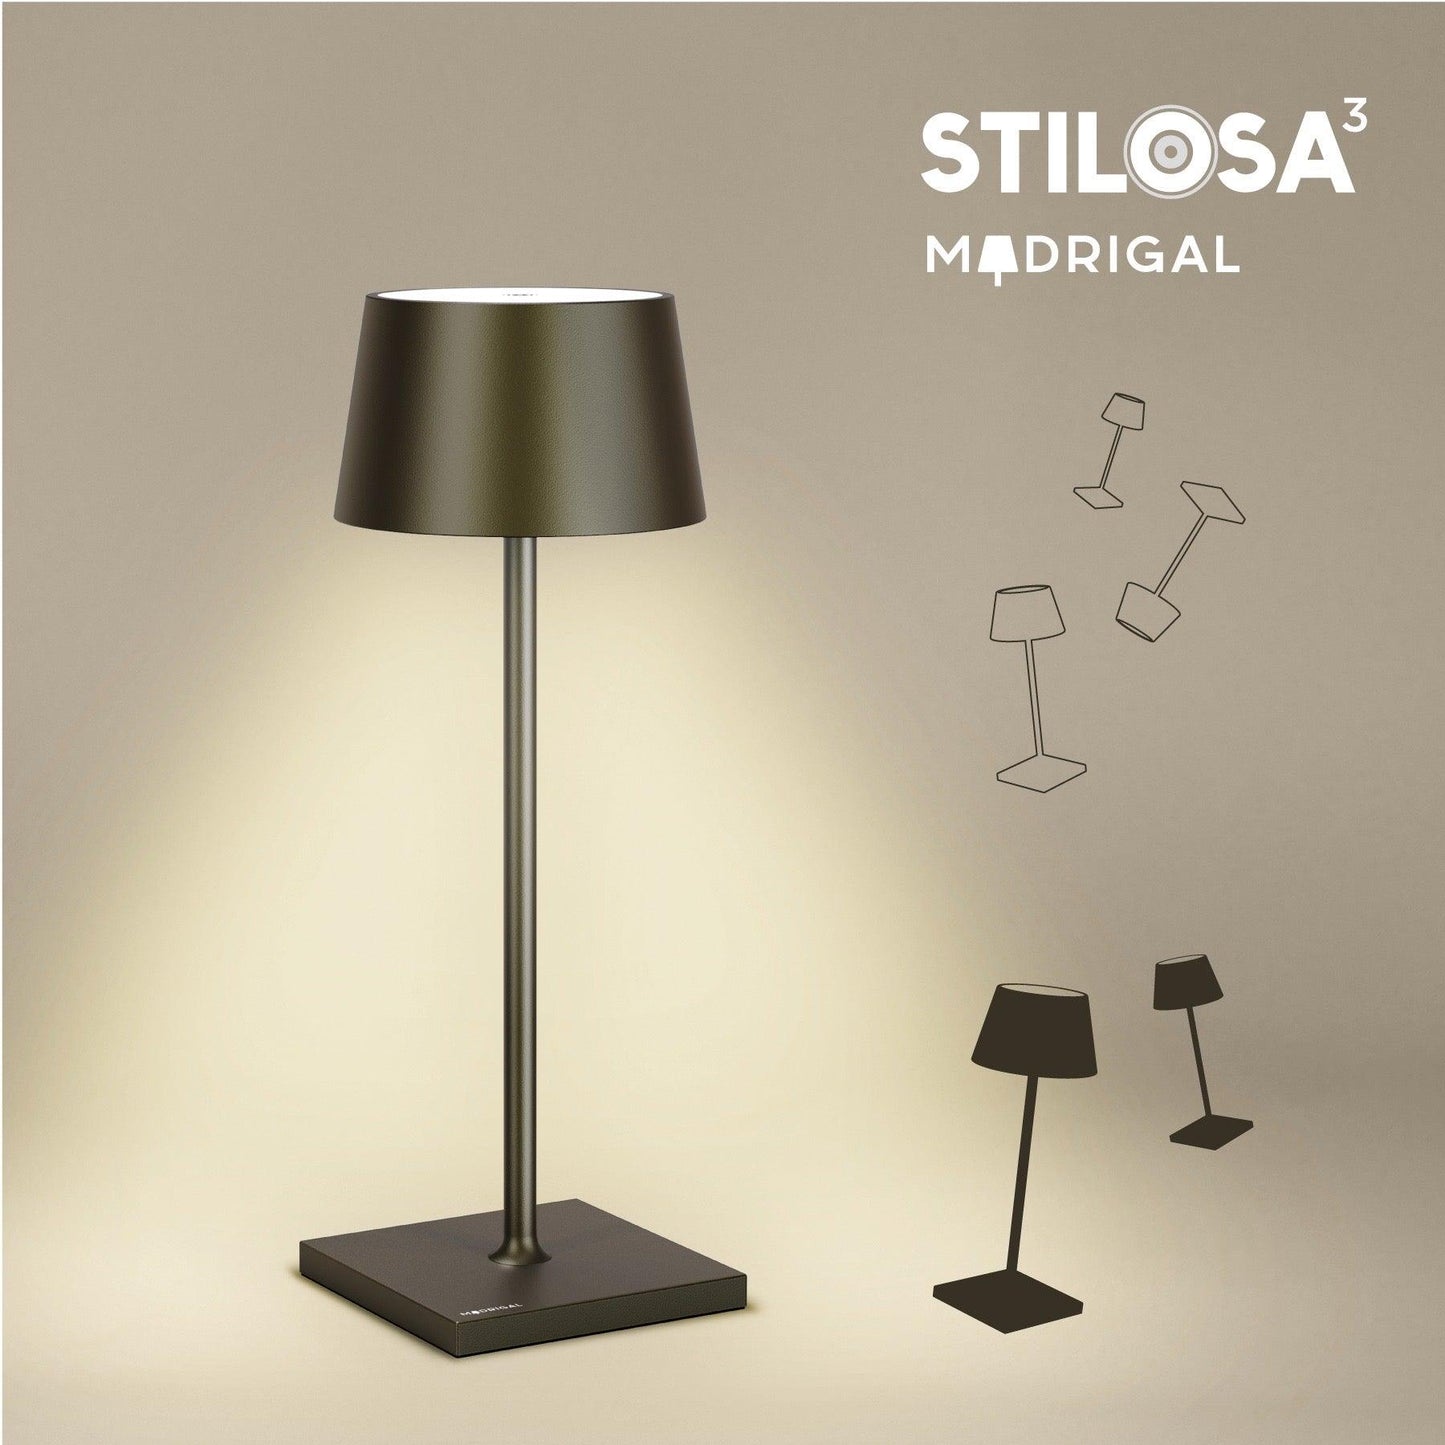 Stilosa - Tropical Black - Madrigal